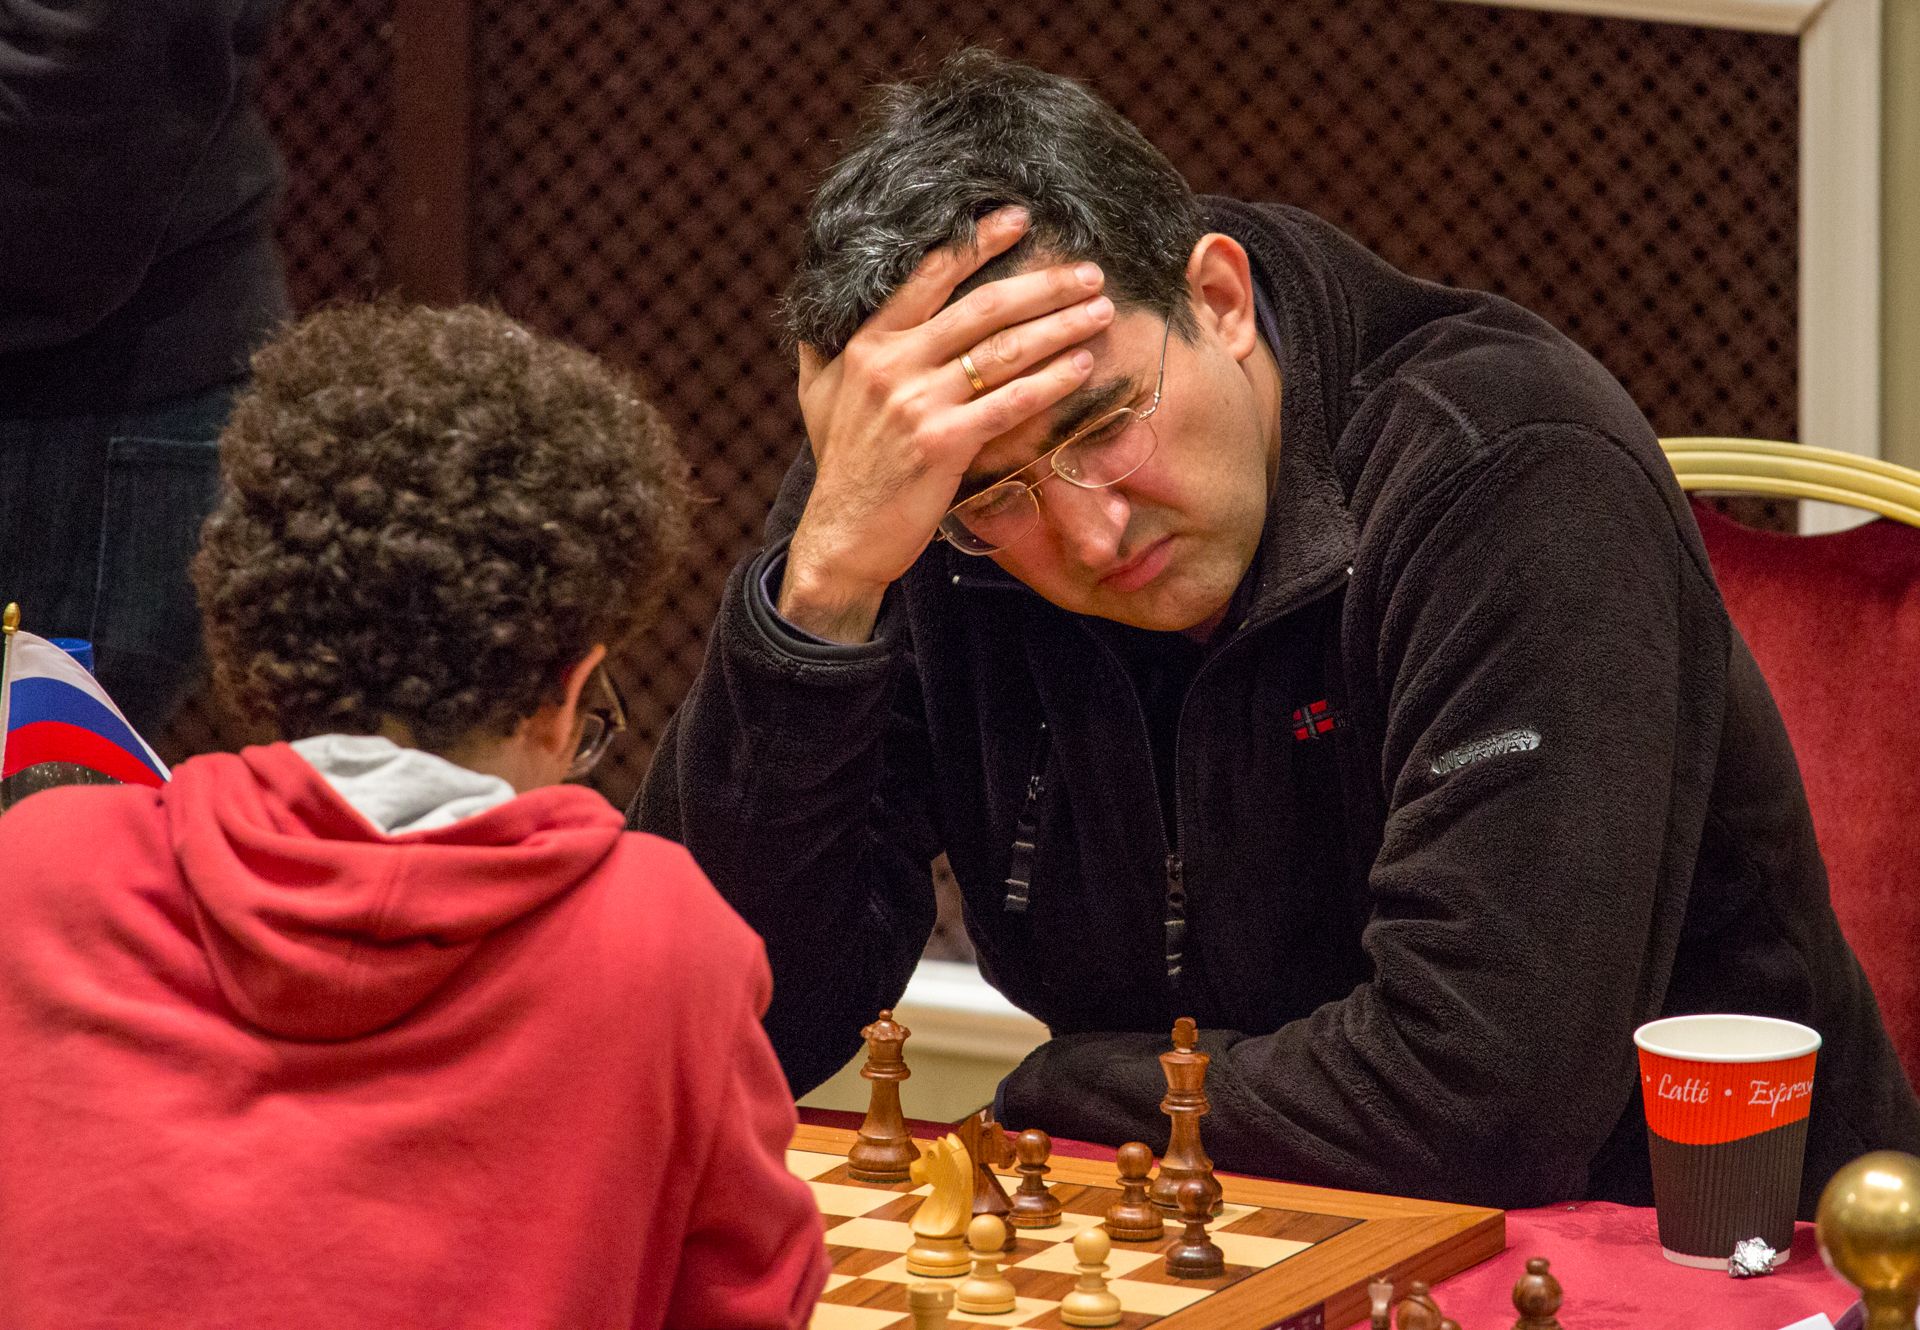 Play Like Vladimir Kramnik - Chess Lessons 